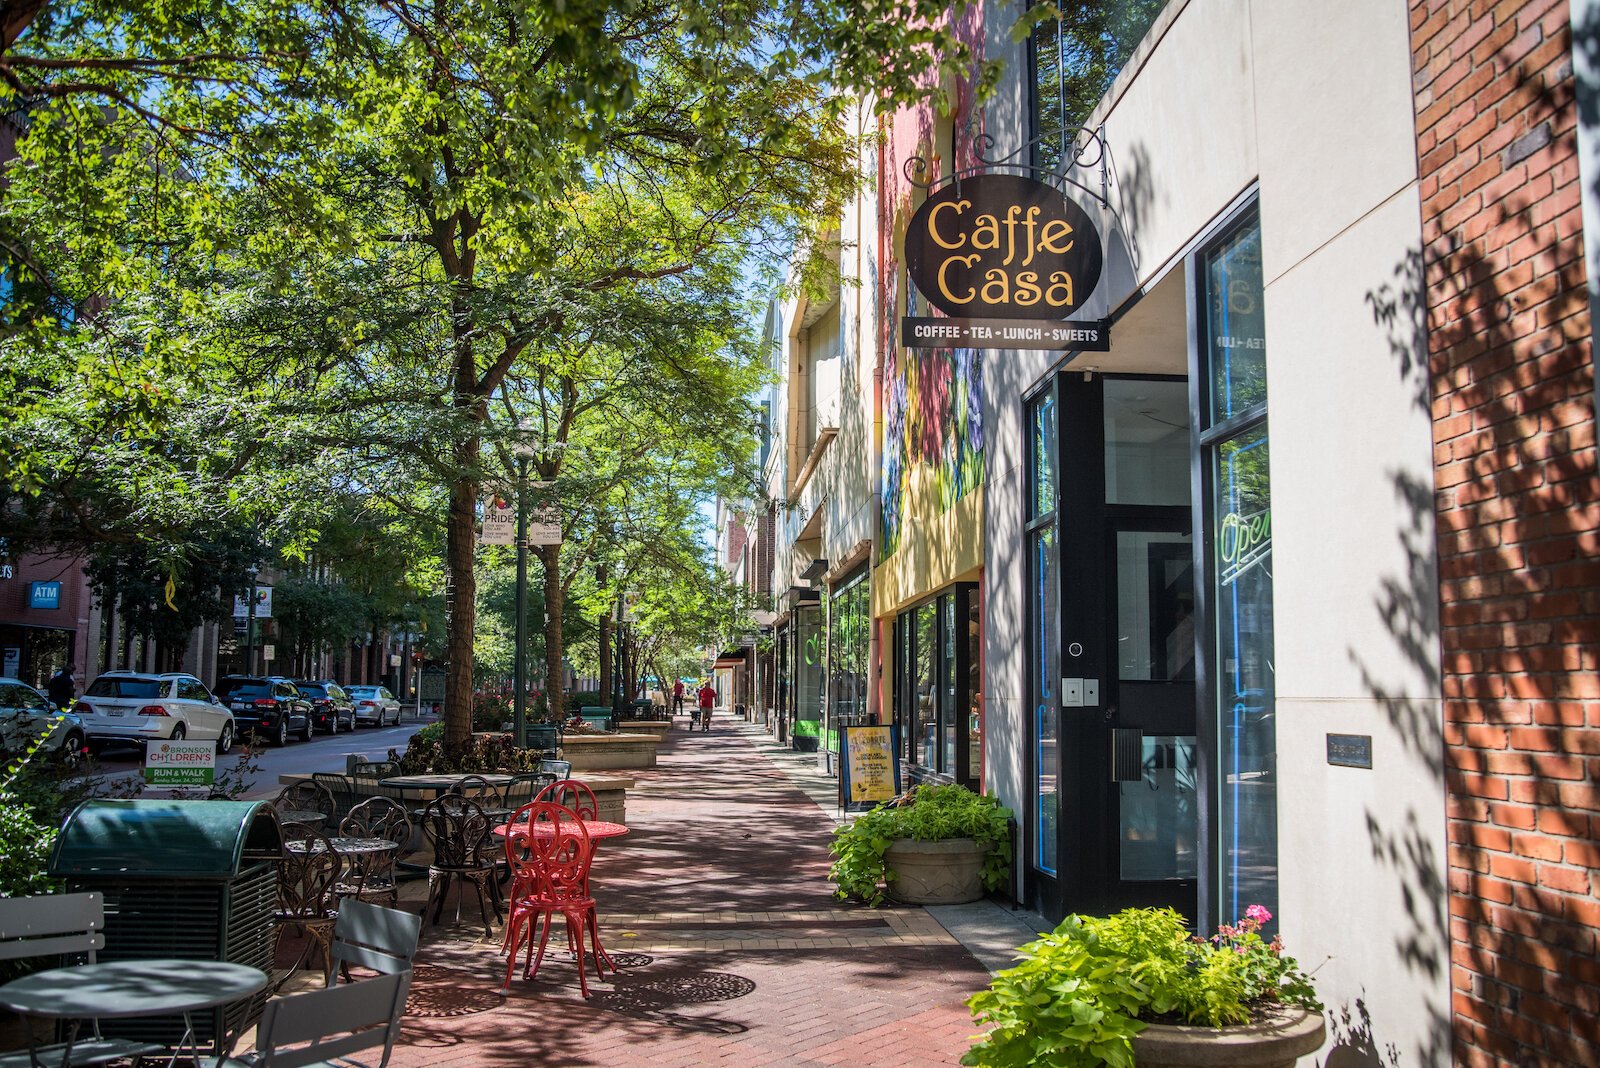 Caffé Casa, located at 128 S. Kalamazoo Mall, turns 30 this year.